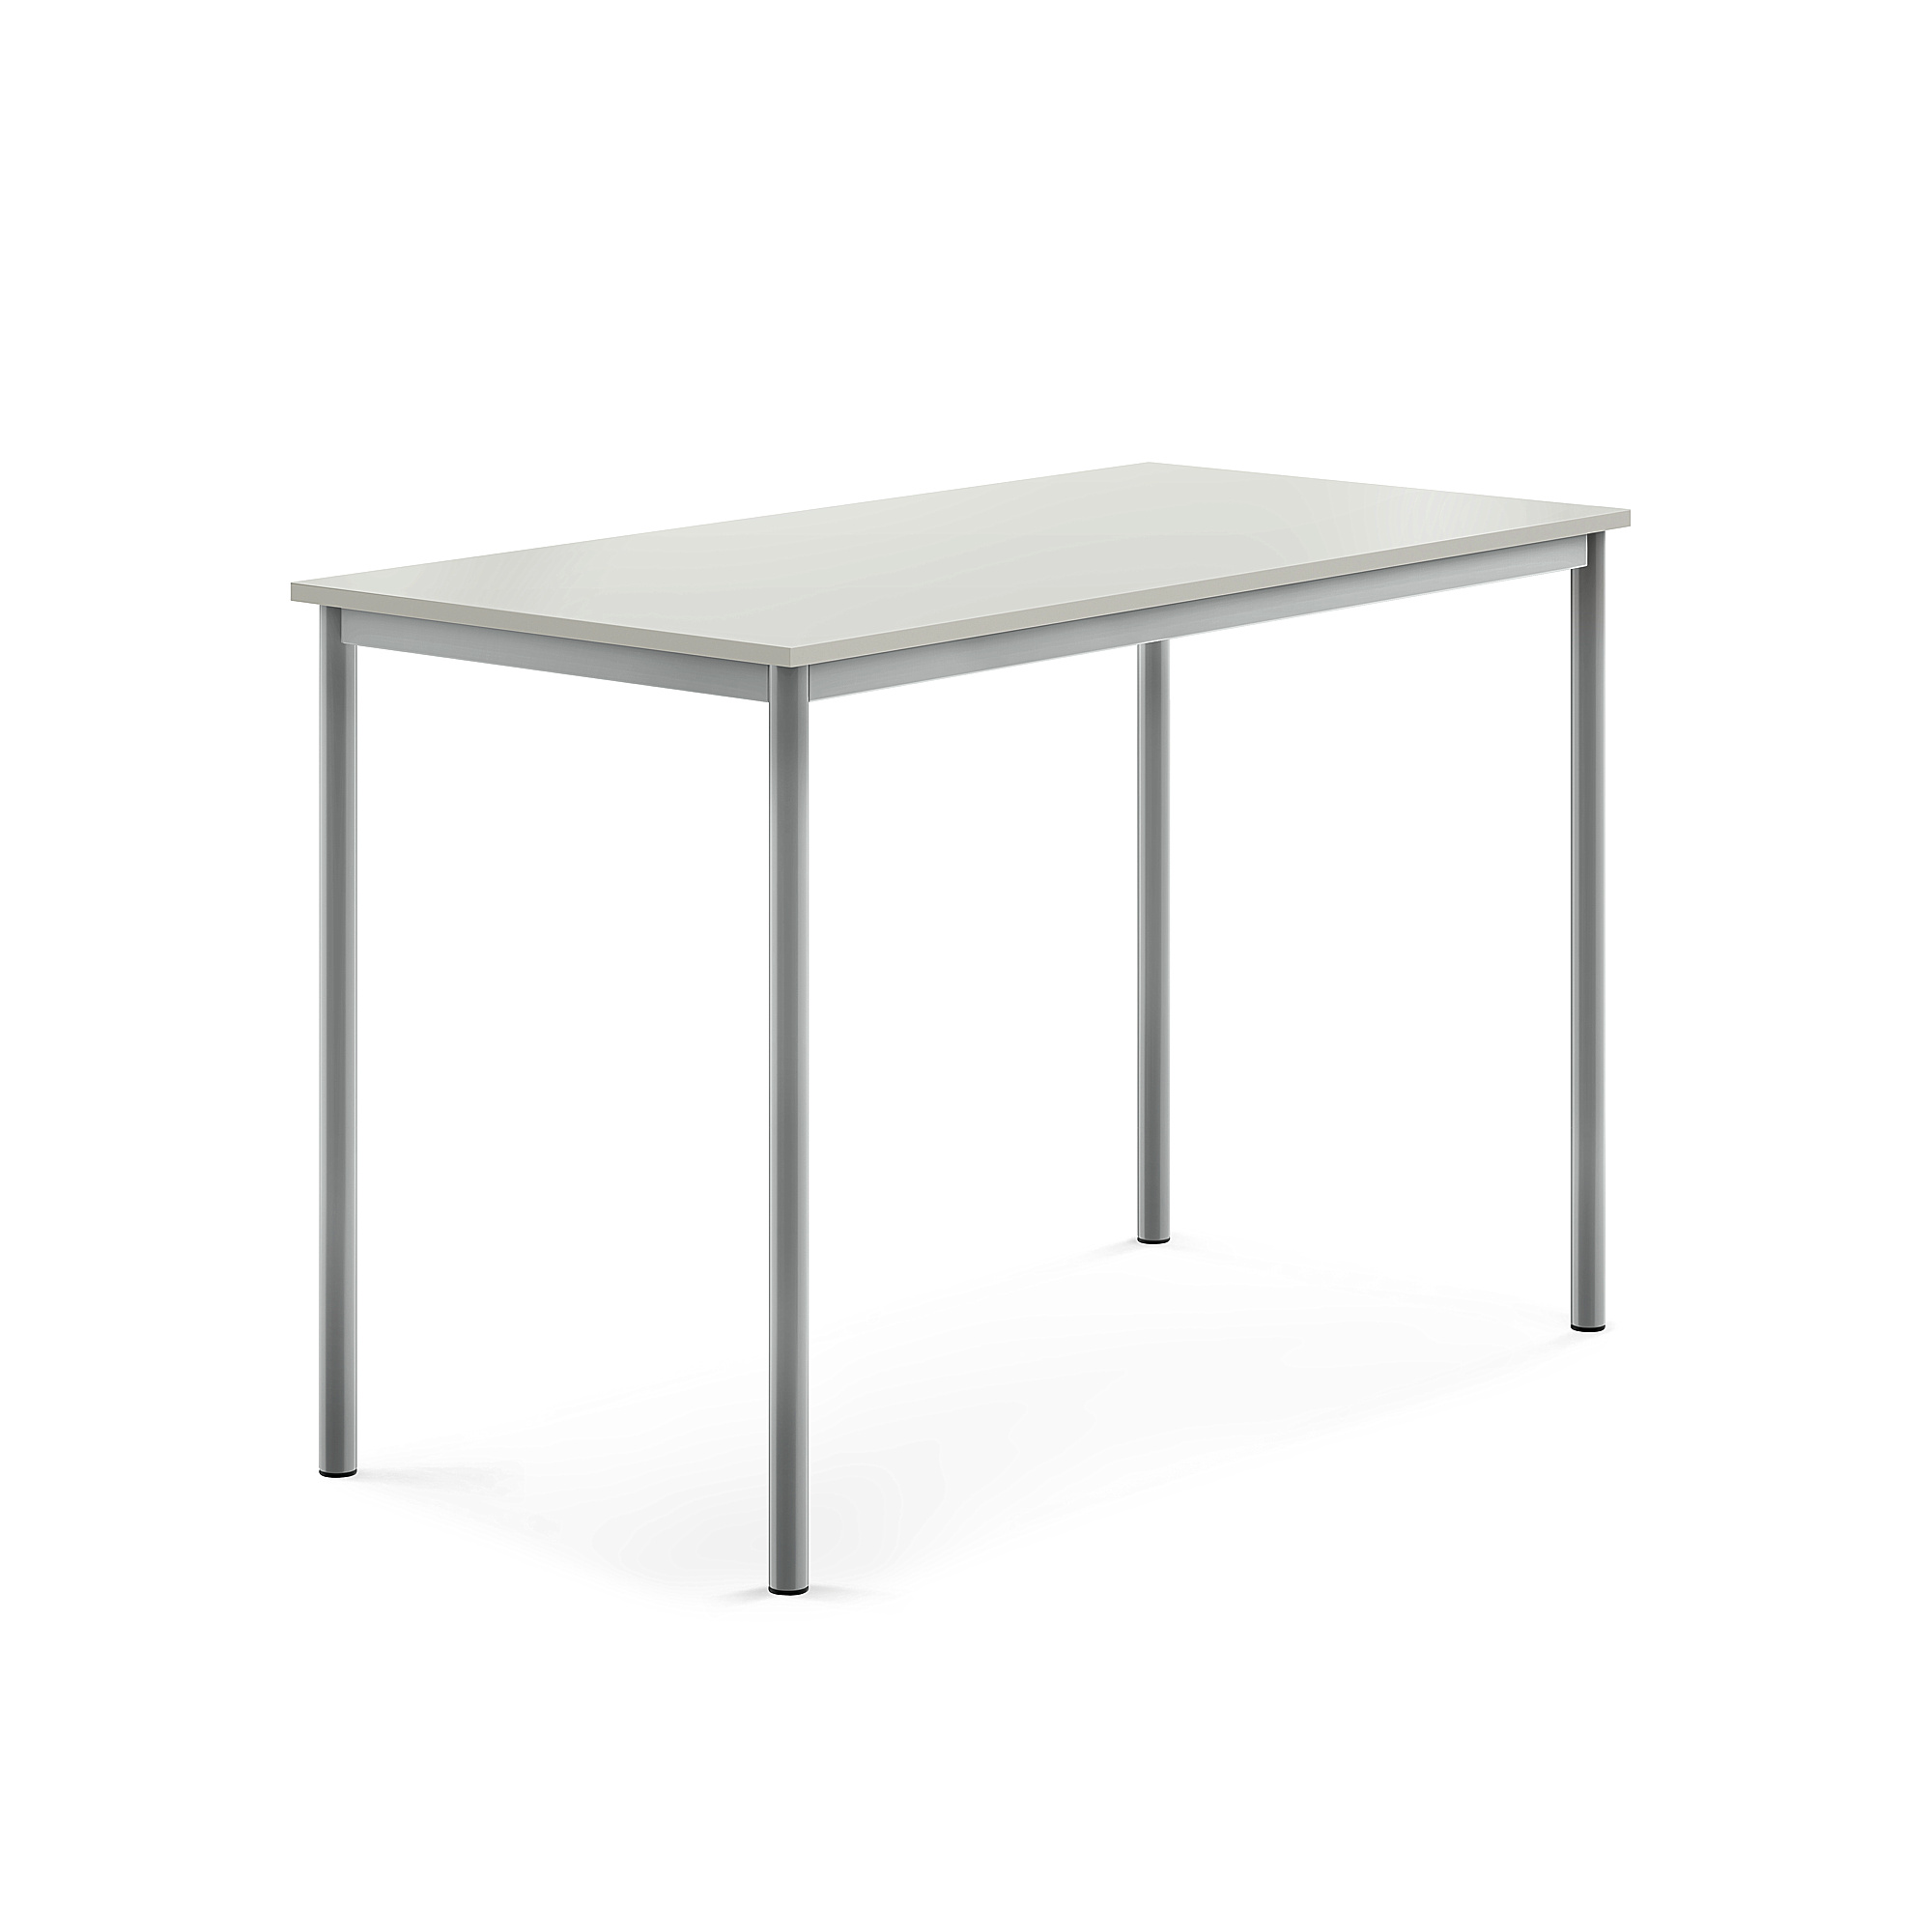 Stůl SONITUS, 1400x700x900 mm, stříbrné nohy, HPL deska tlumící hluk, šedá